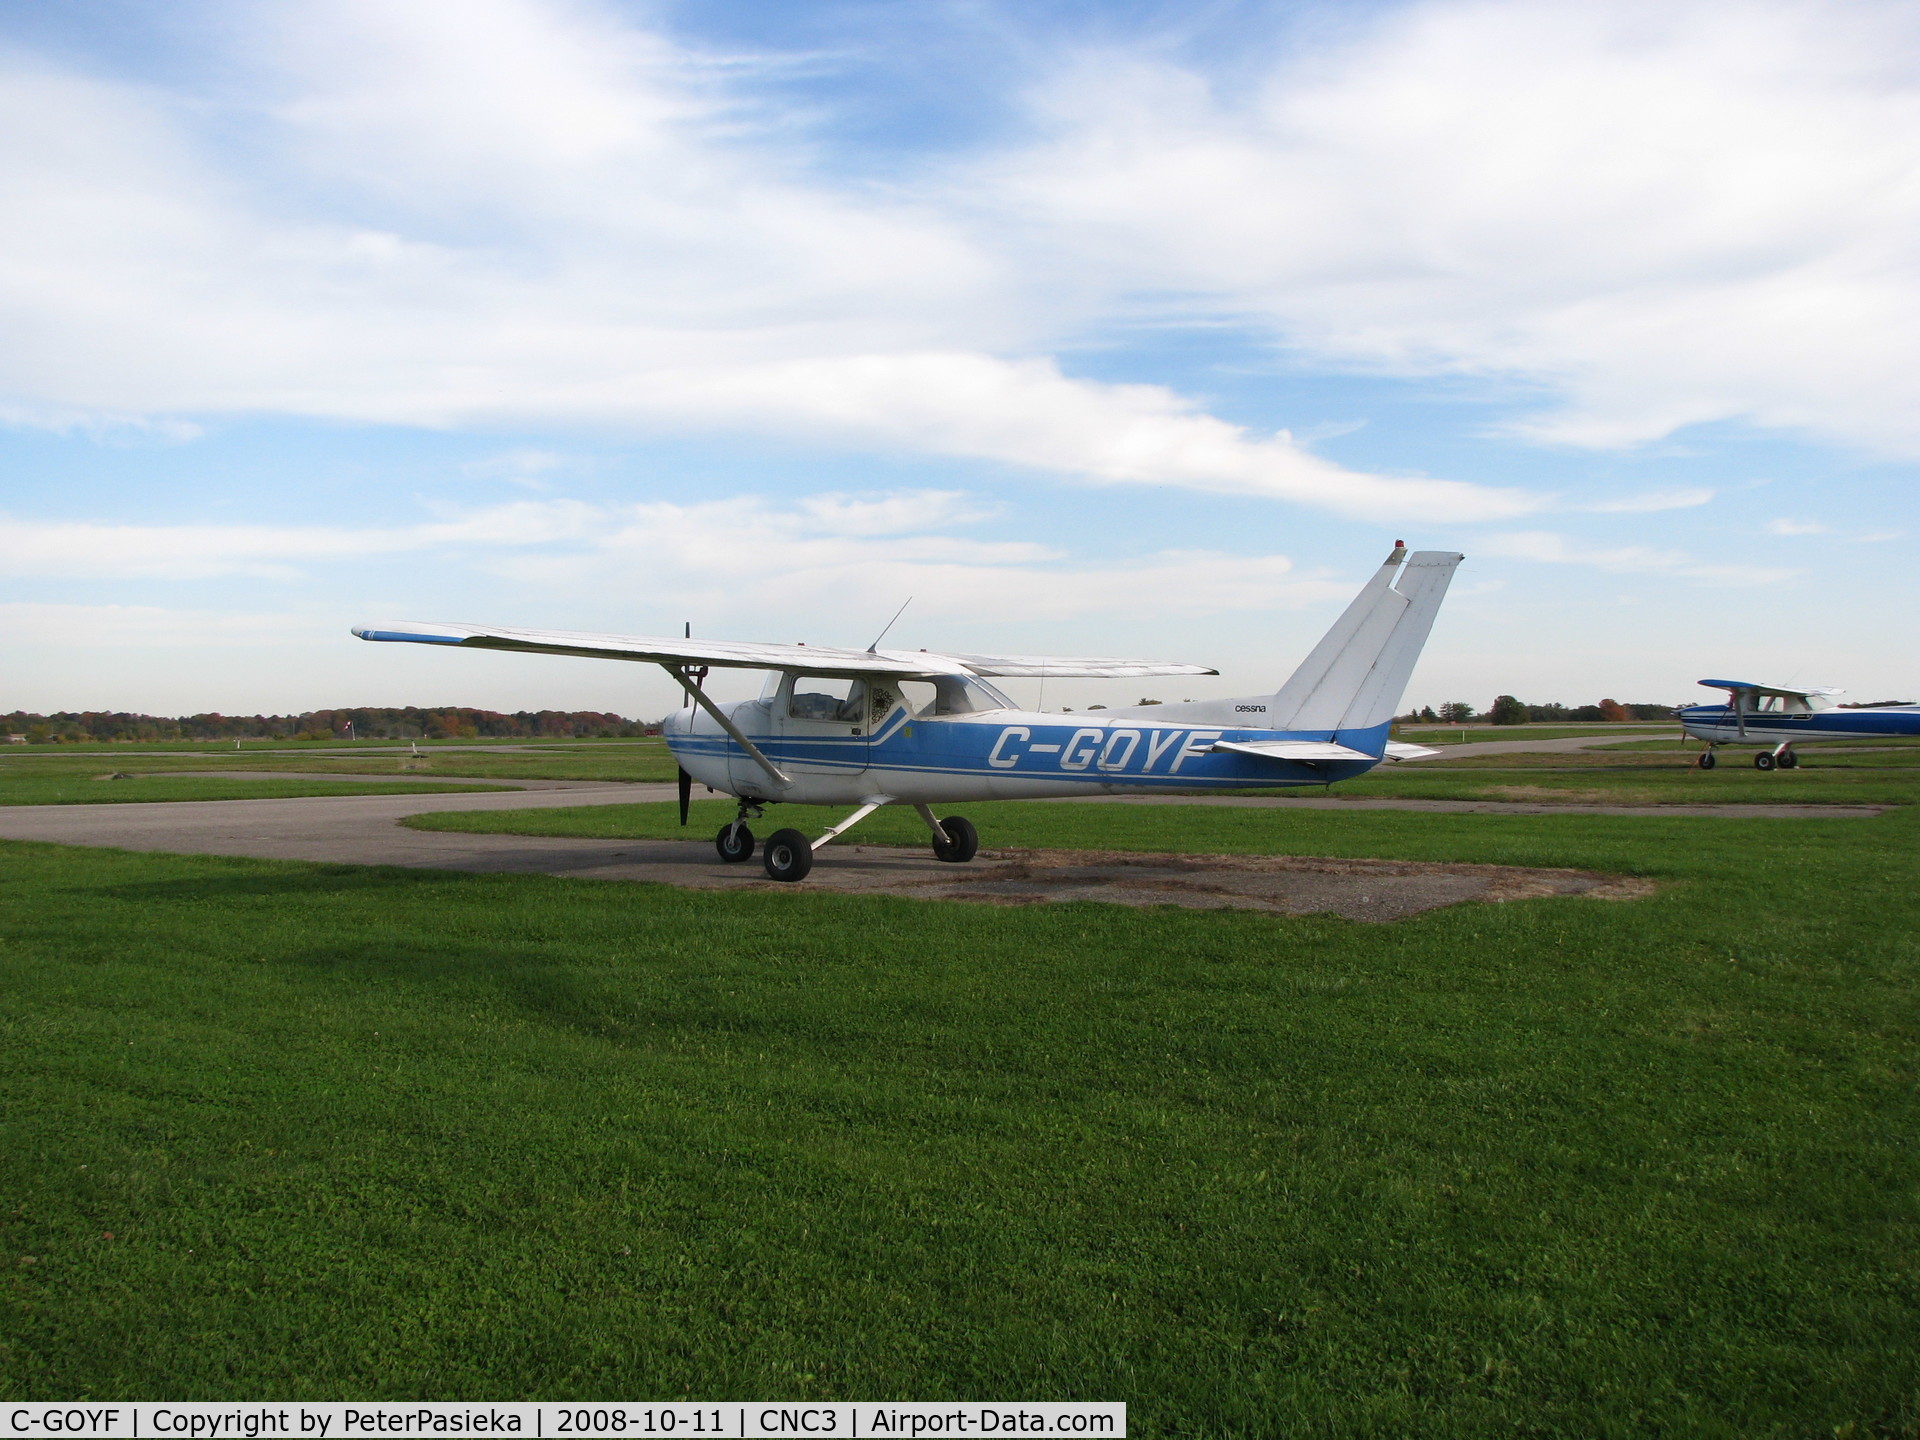 C-GOYF, 1974 Cessna 150M C/N 15076127, @ Brampton Airport